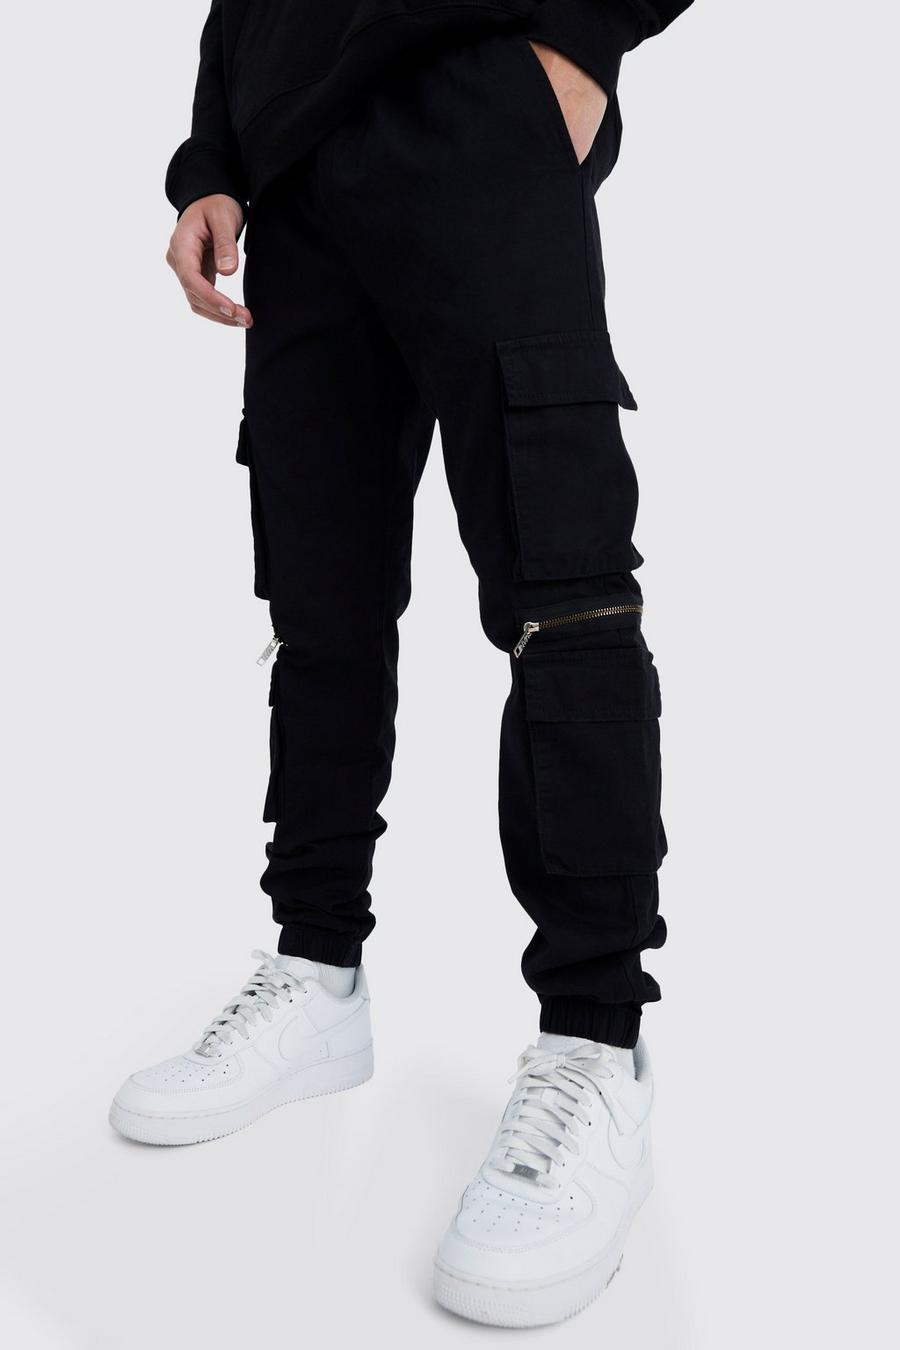 Grey Men Zipper Multi-pocket Pants